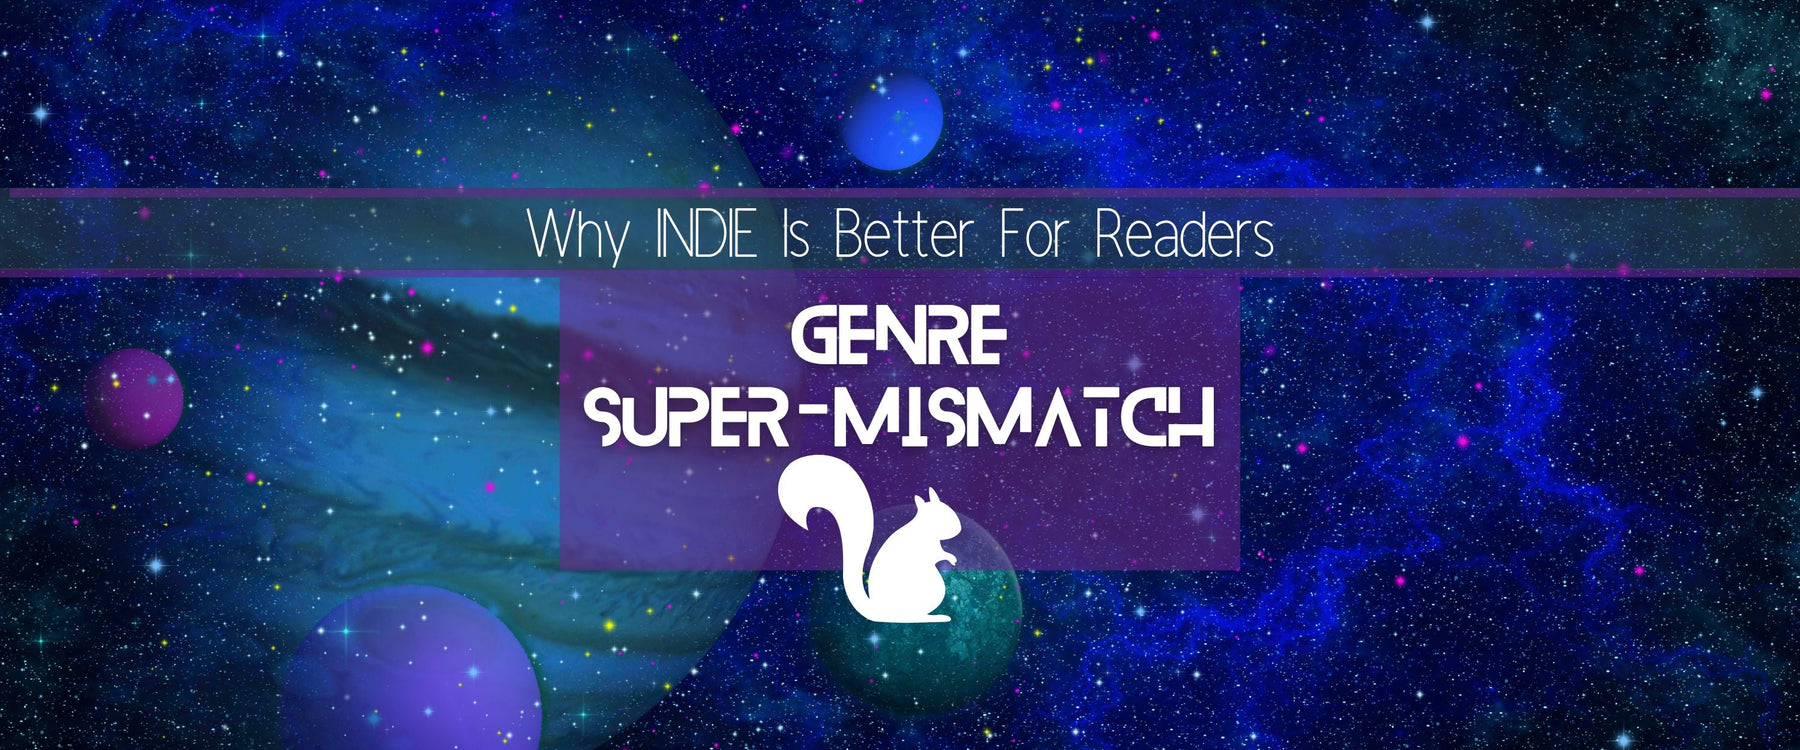 Genre SUPER-Mismatch | INDIE Books